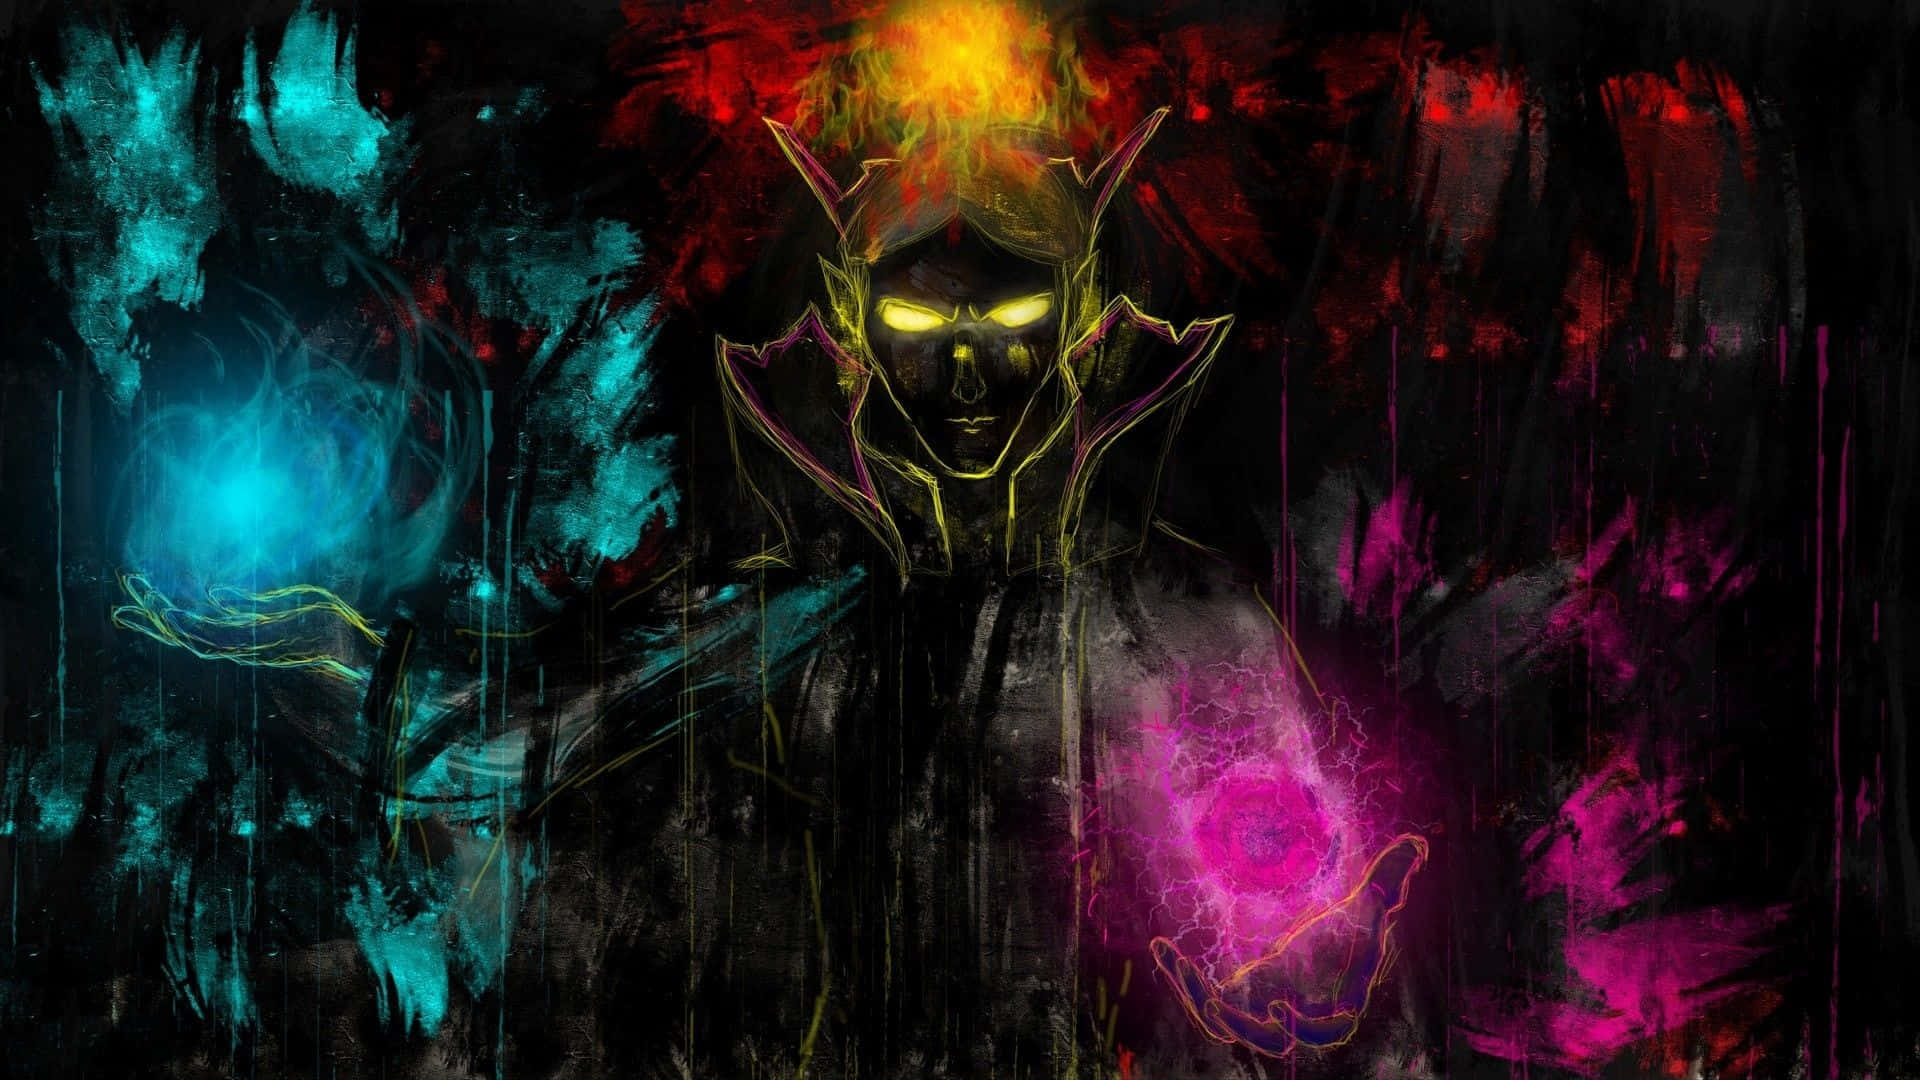 Master of Magical Force - Invoker from Dota 2 Wallpaper